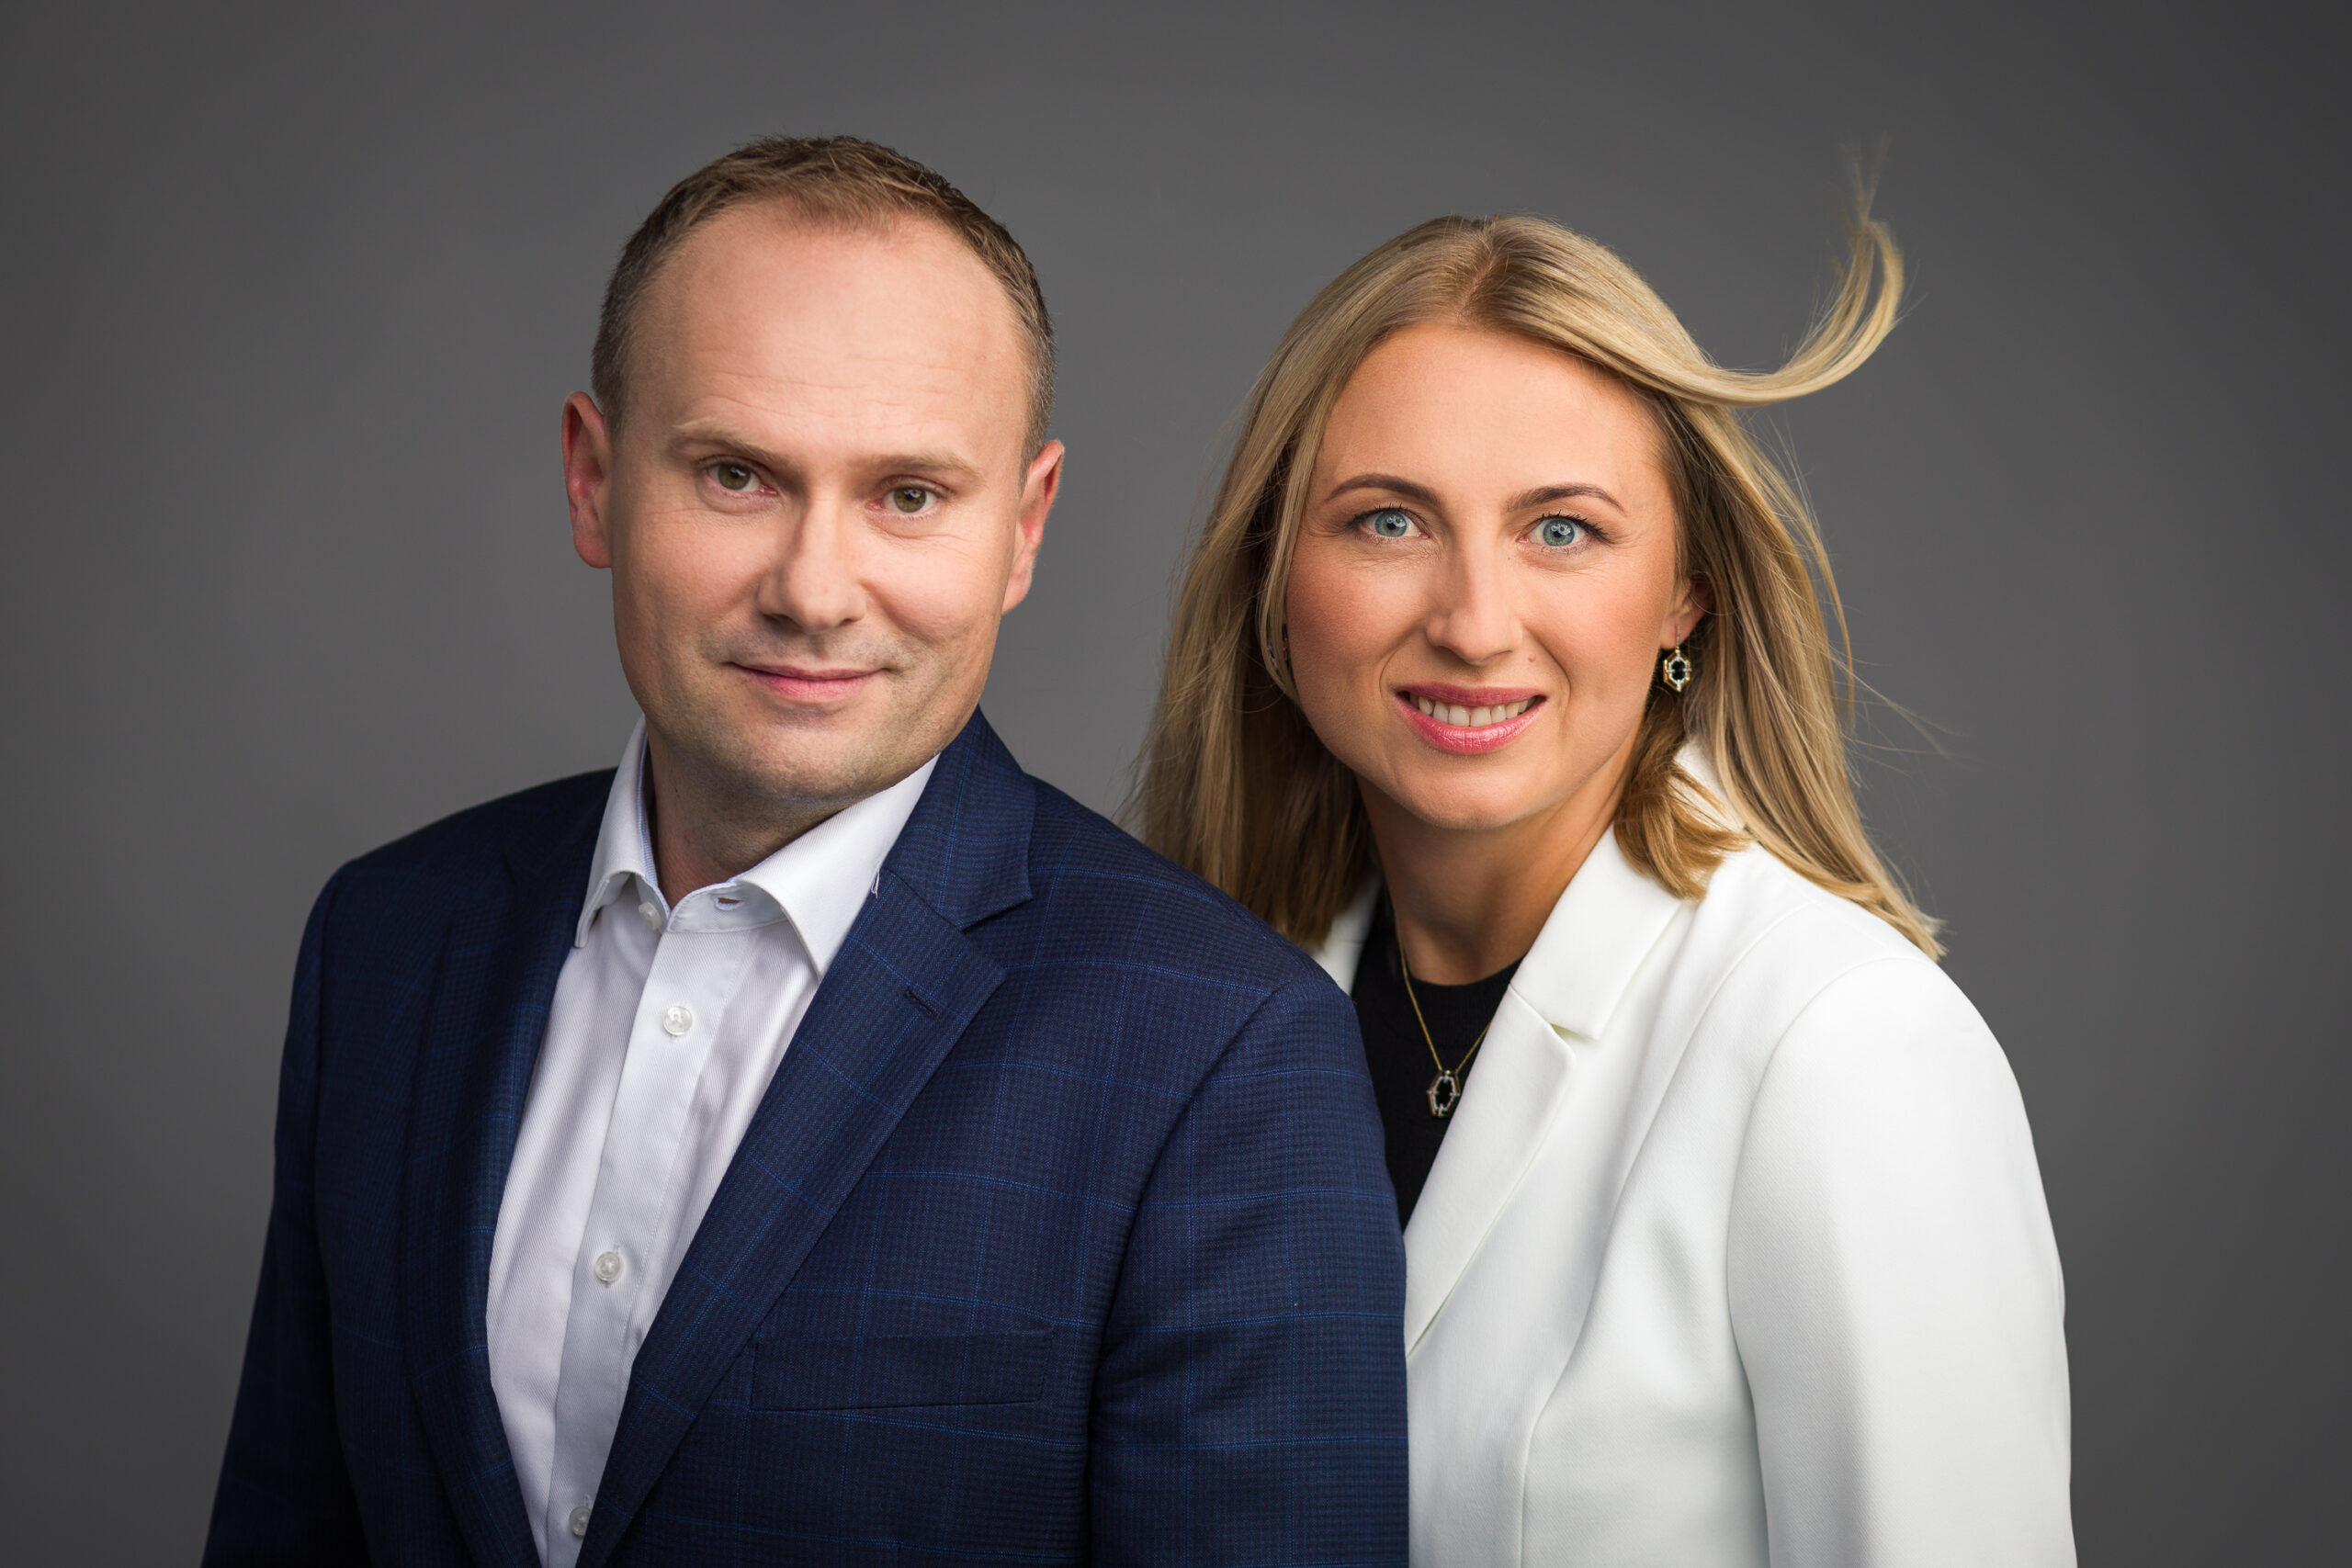 Lukas Korbas and Malgorzata Dankowska - founders of Koda.